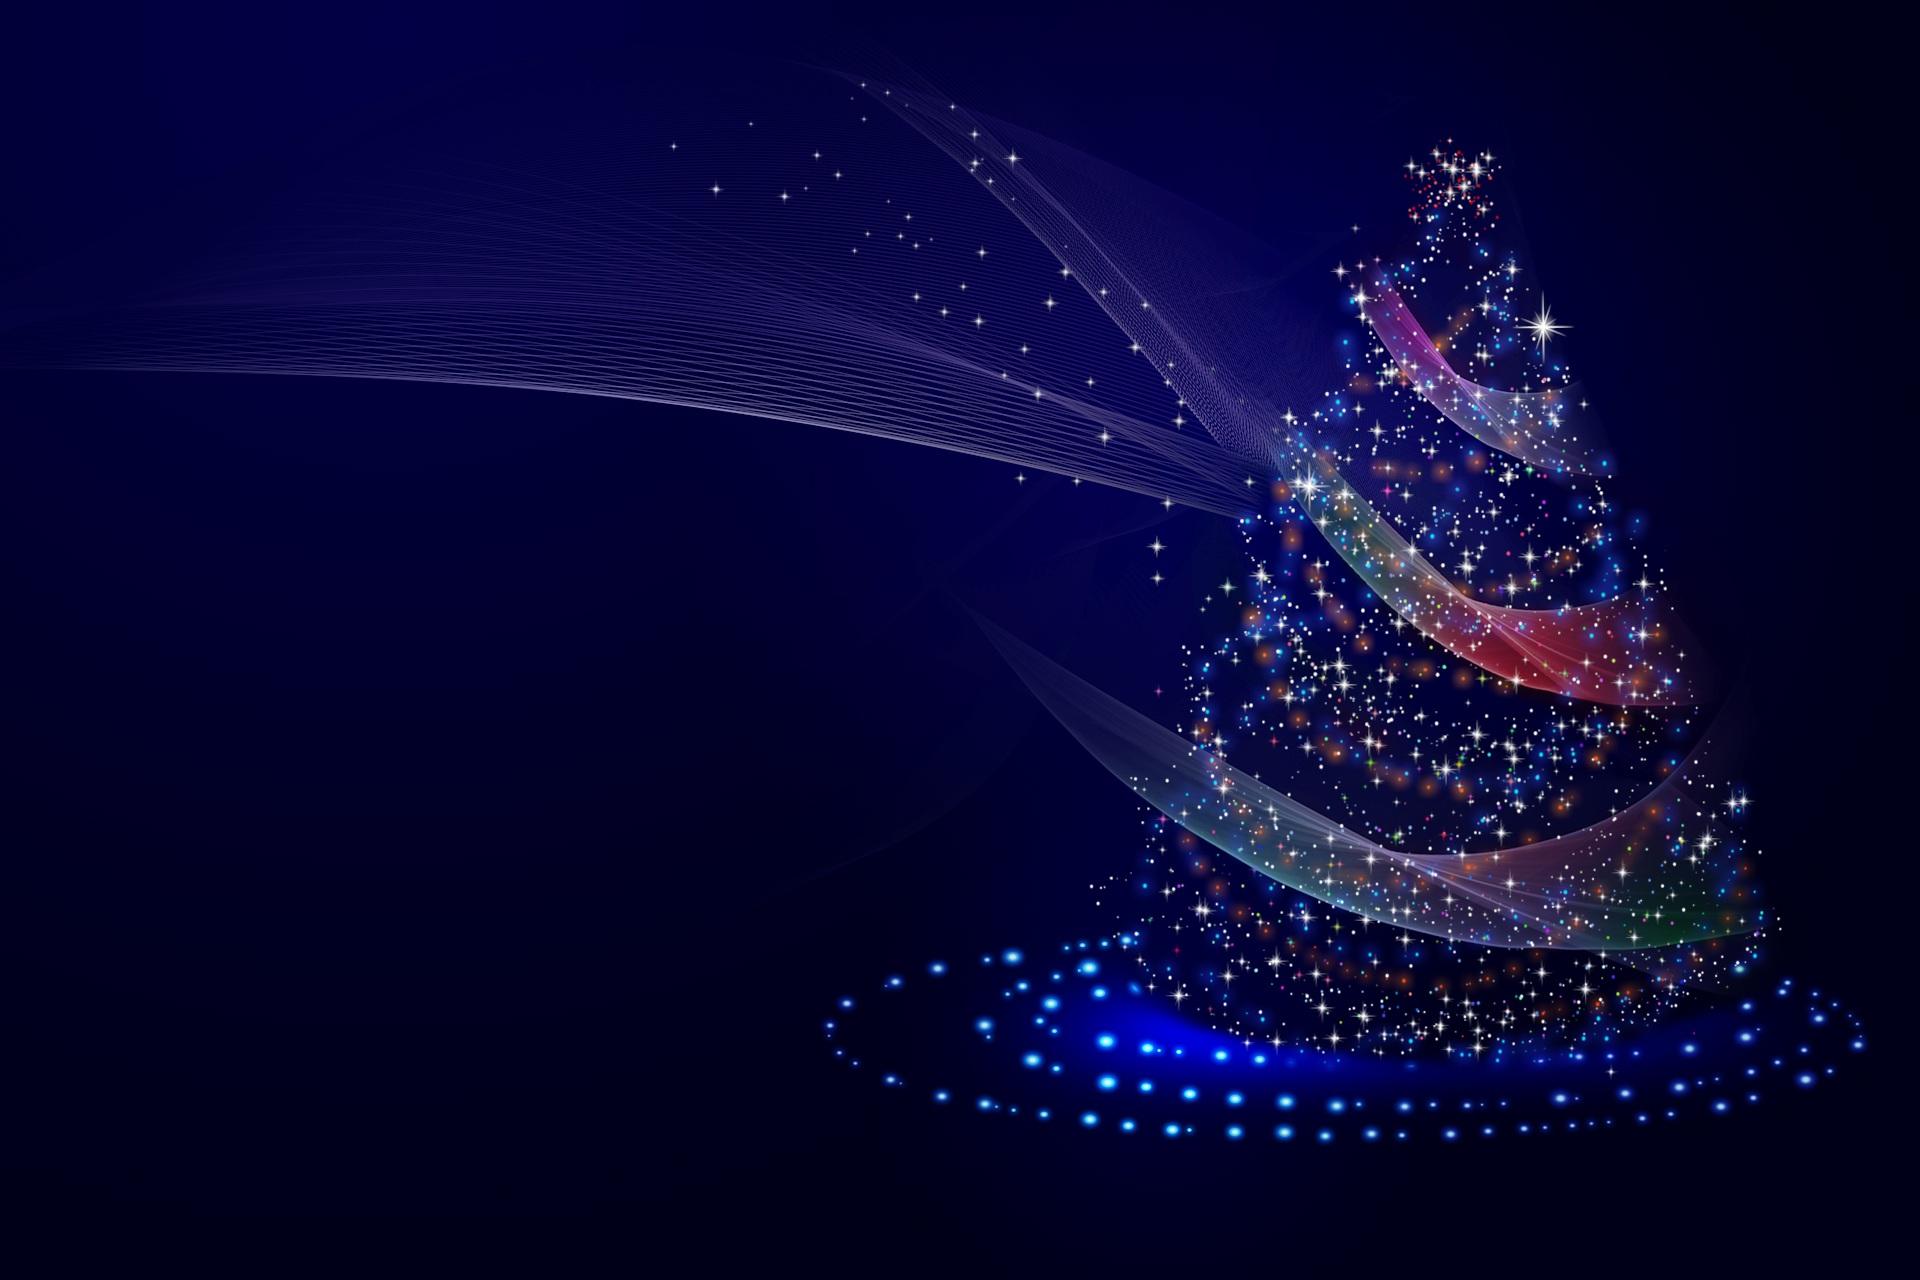 Christmas Tree Illustrations, HD Celebrations, 4k Wallpaper, Image